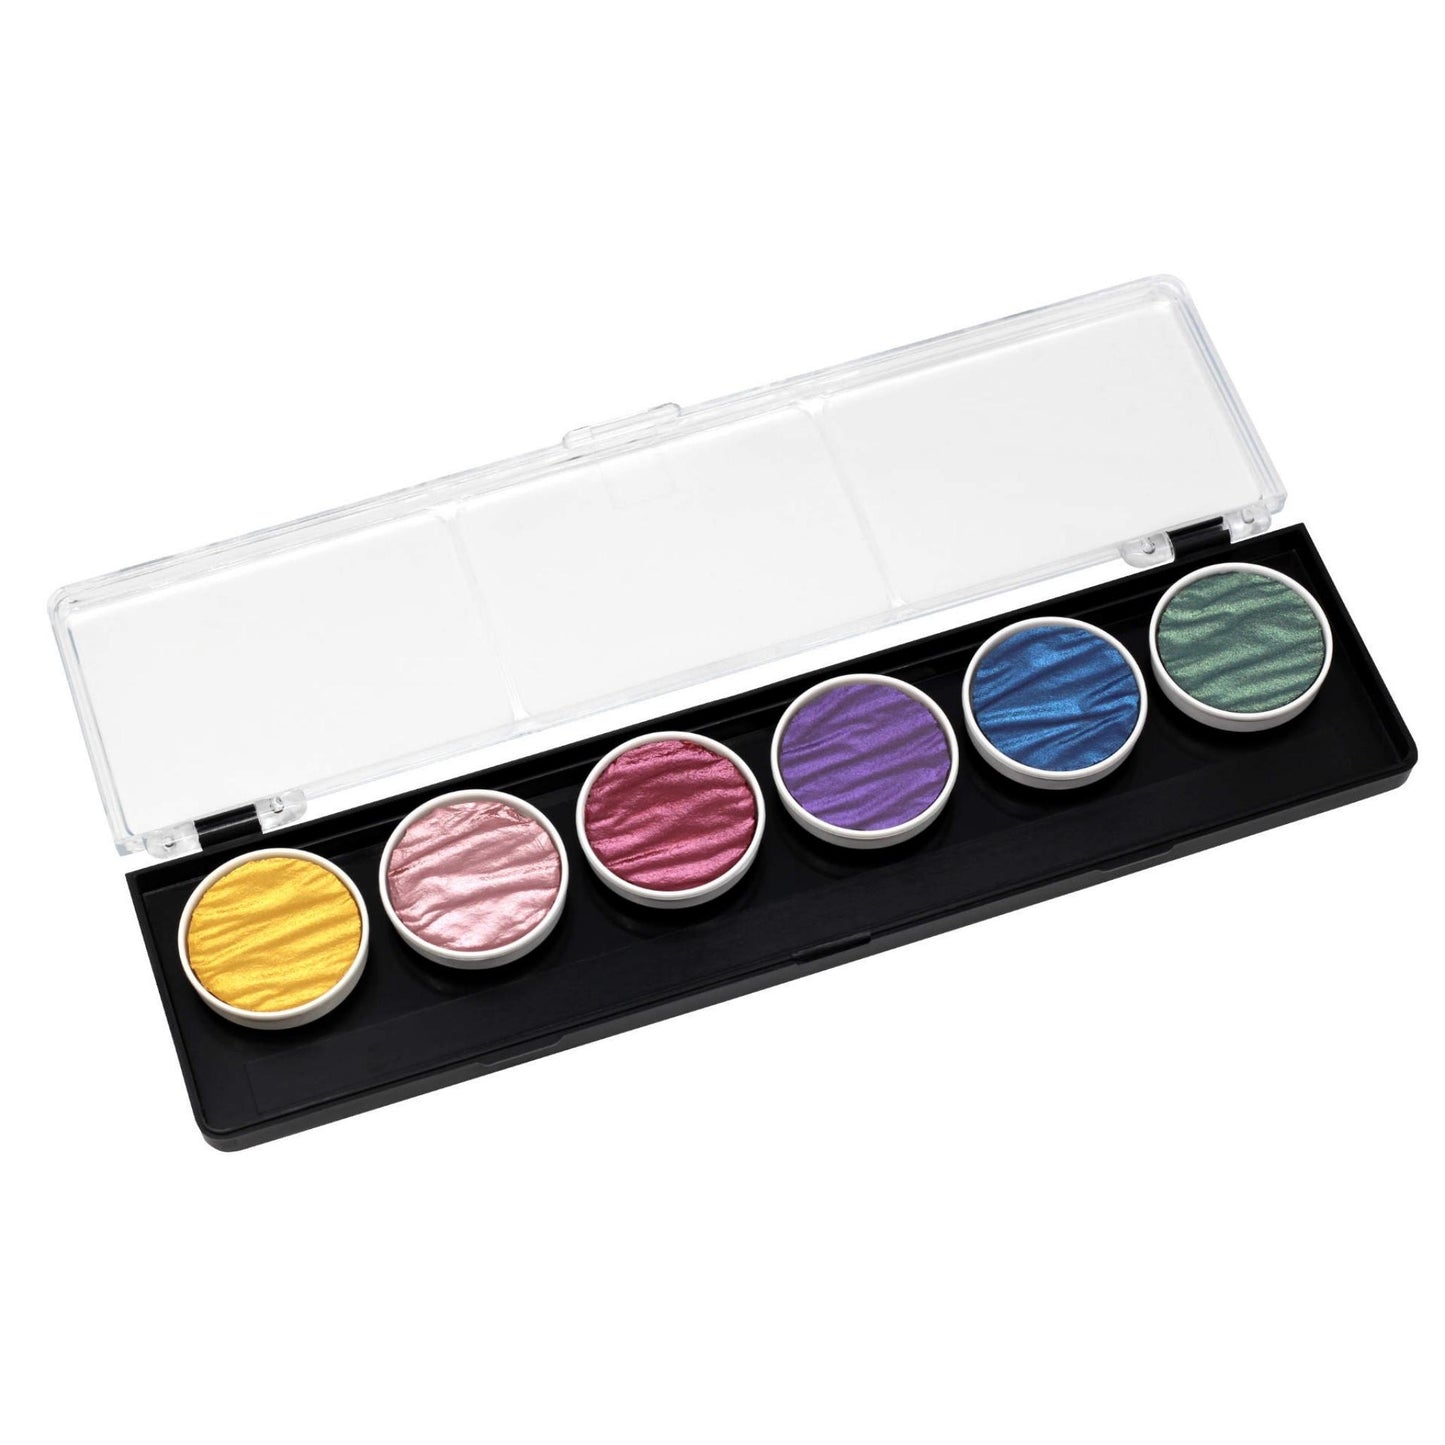 FINETEC GmbH - Coliro® Pearlcolors - 6er Set: Rainbow